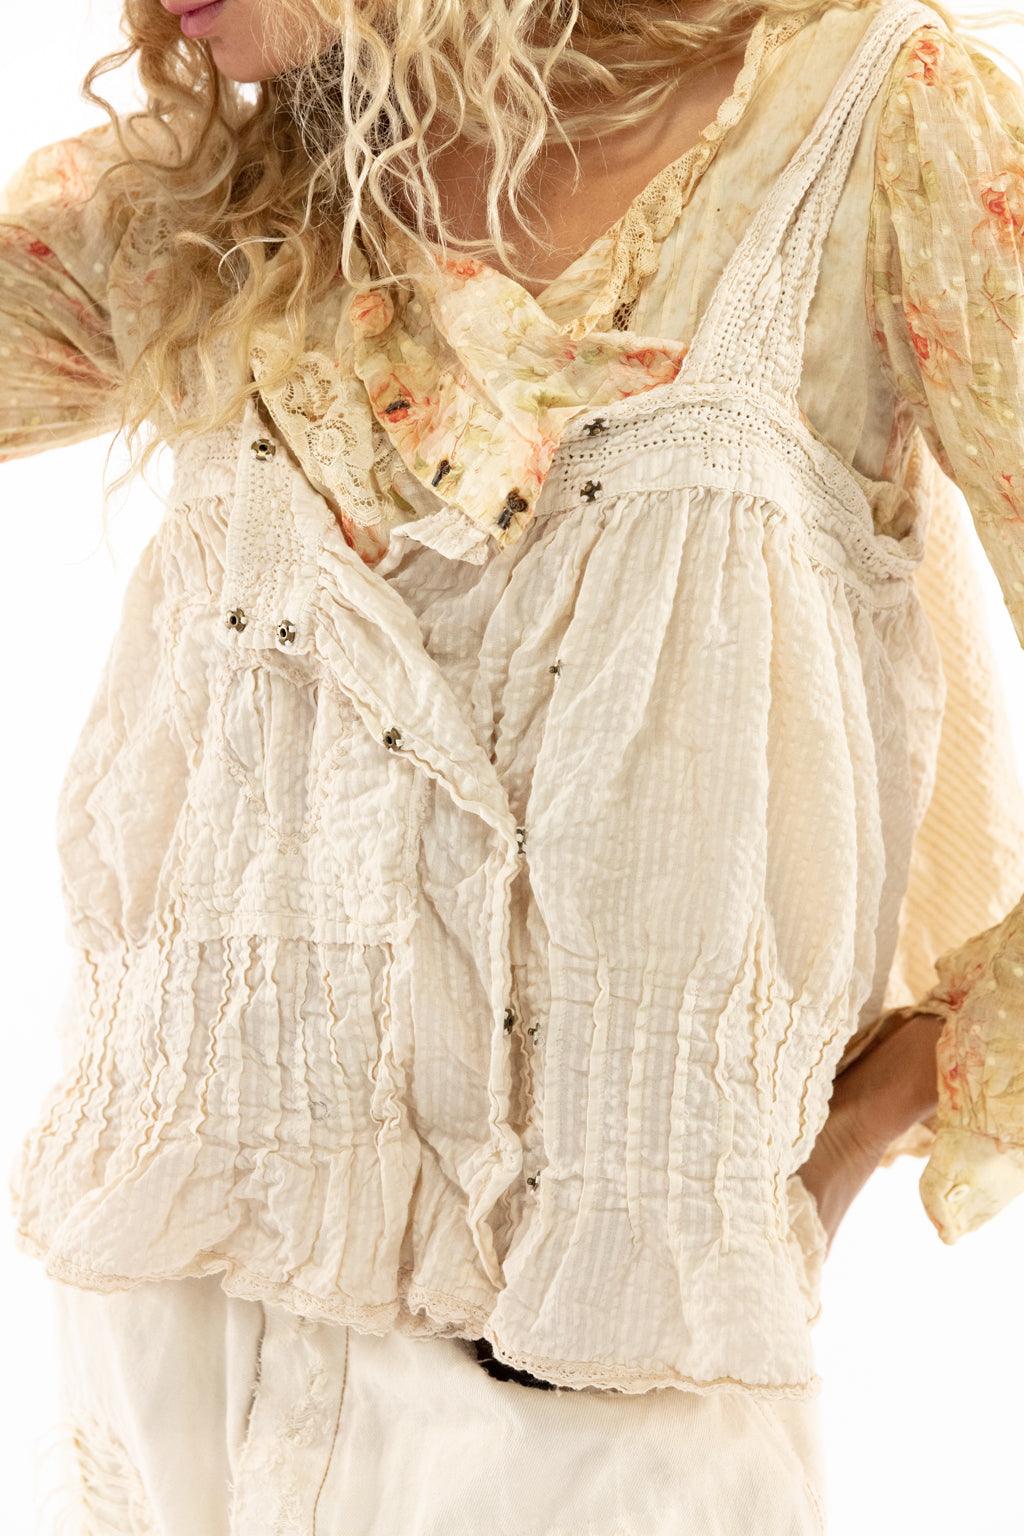 Miriam Amor Tank - Magnolia Pearl Clothing